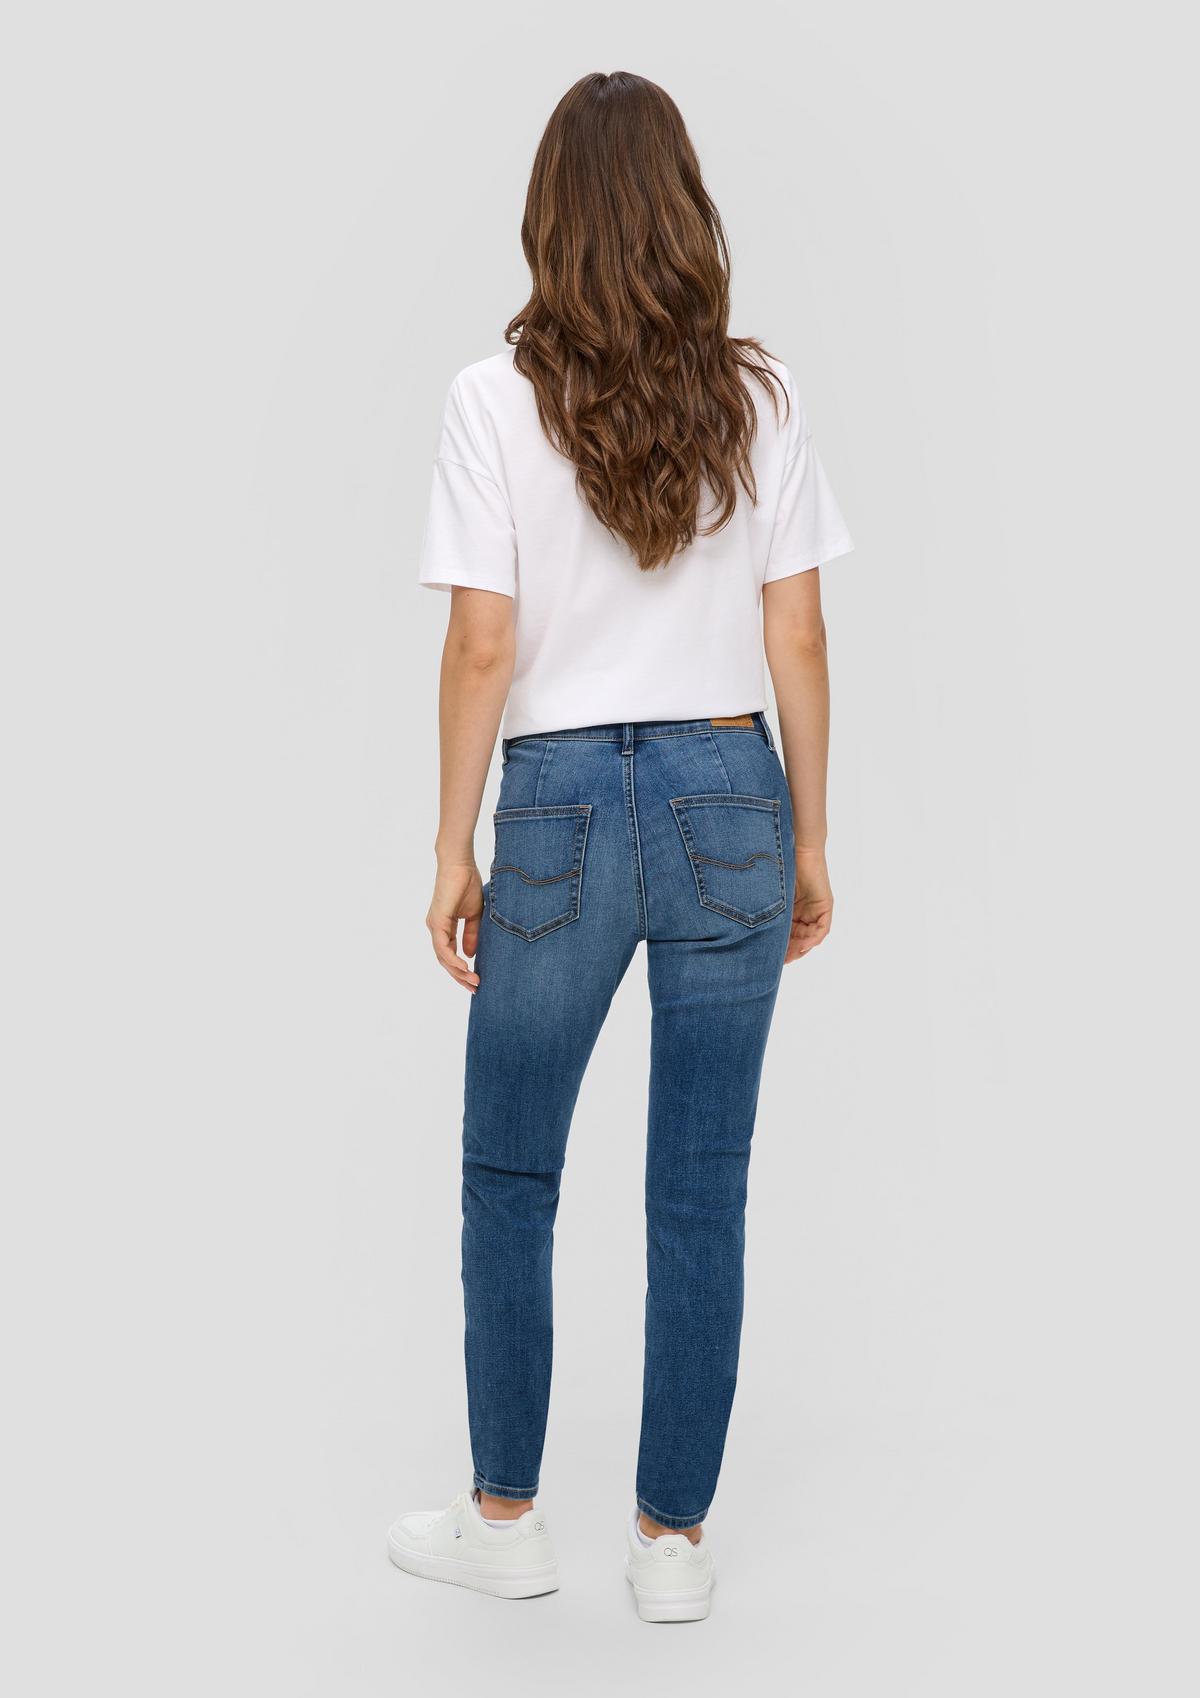 s.Oliver Jeans / super skinny fit / high rise / skinny leg